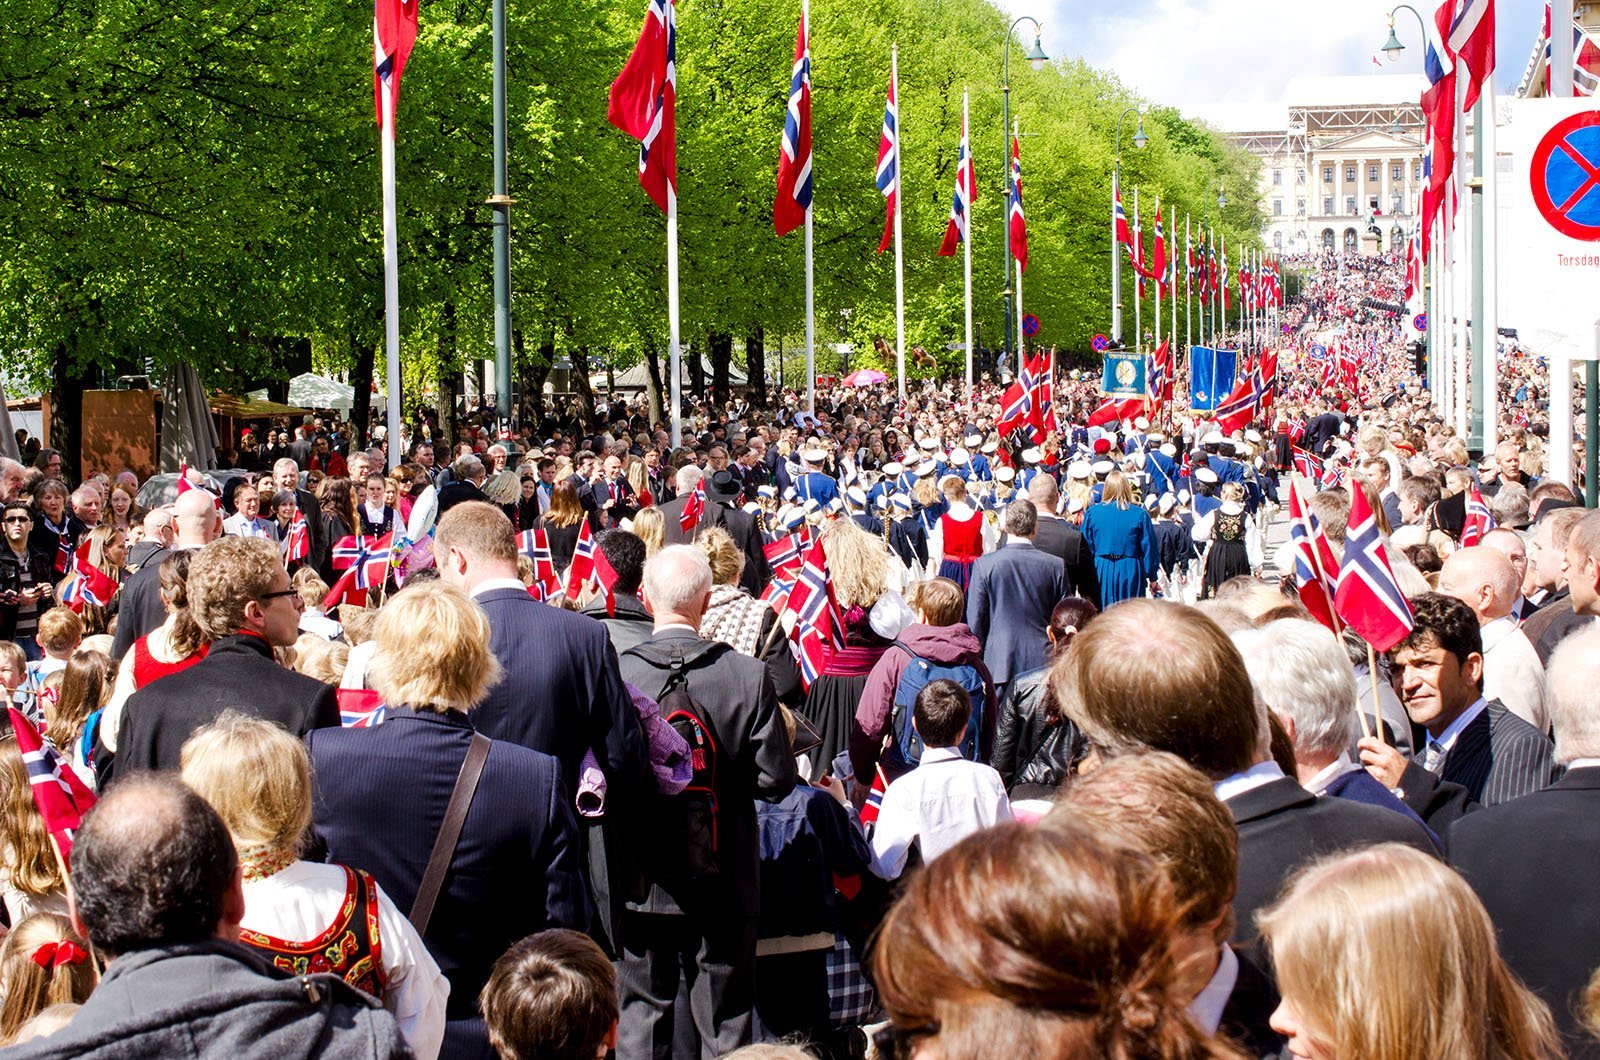 17 May parade in Oslo, Norway. Photo: Nanisimova / Shutterstock.com